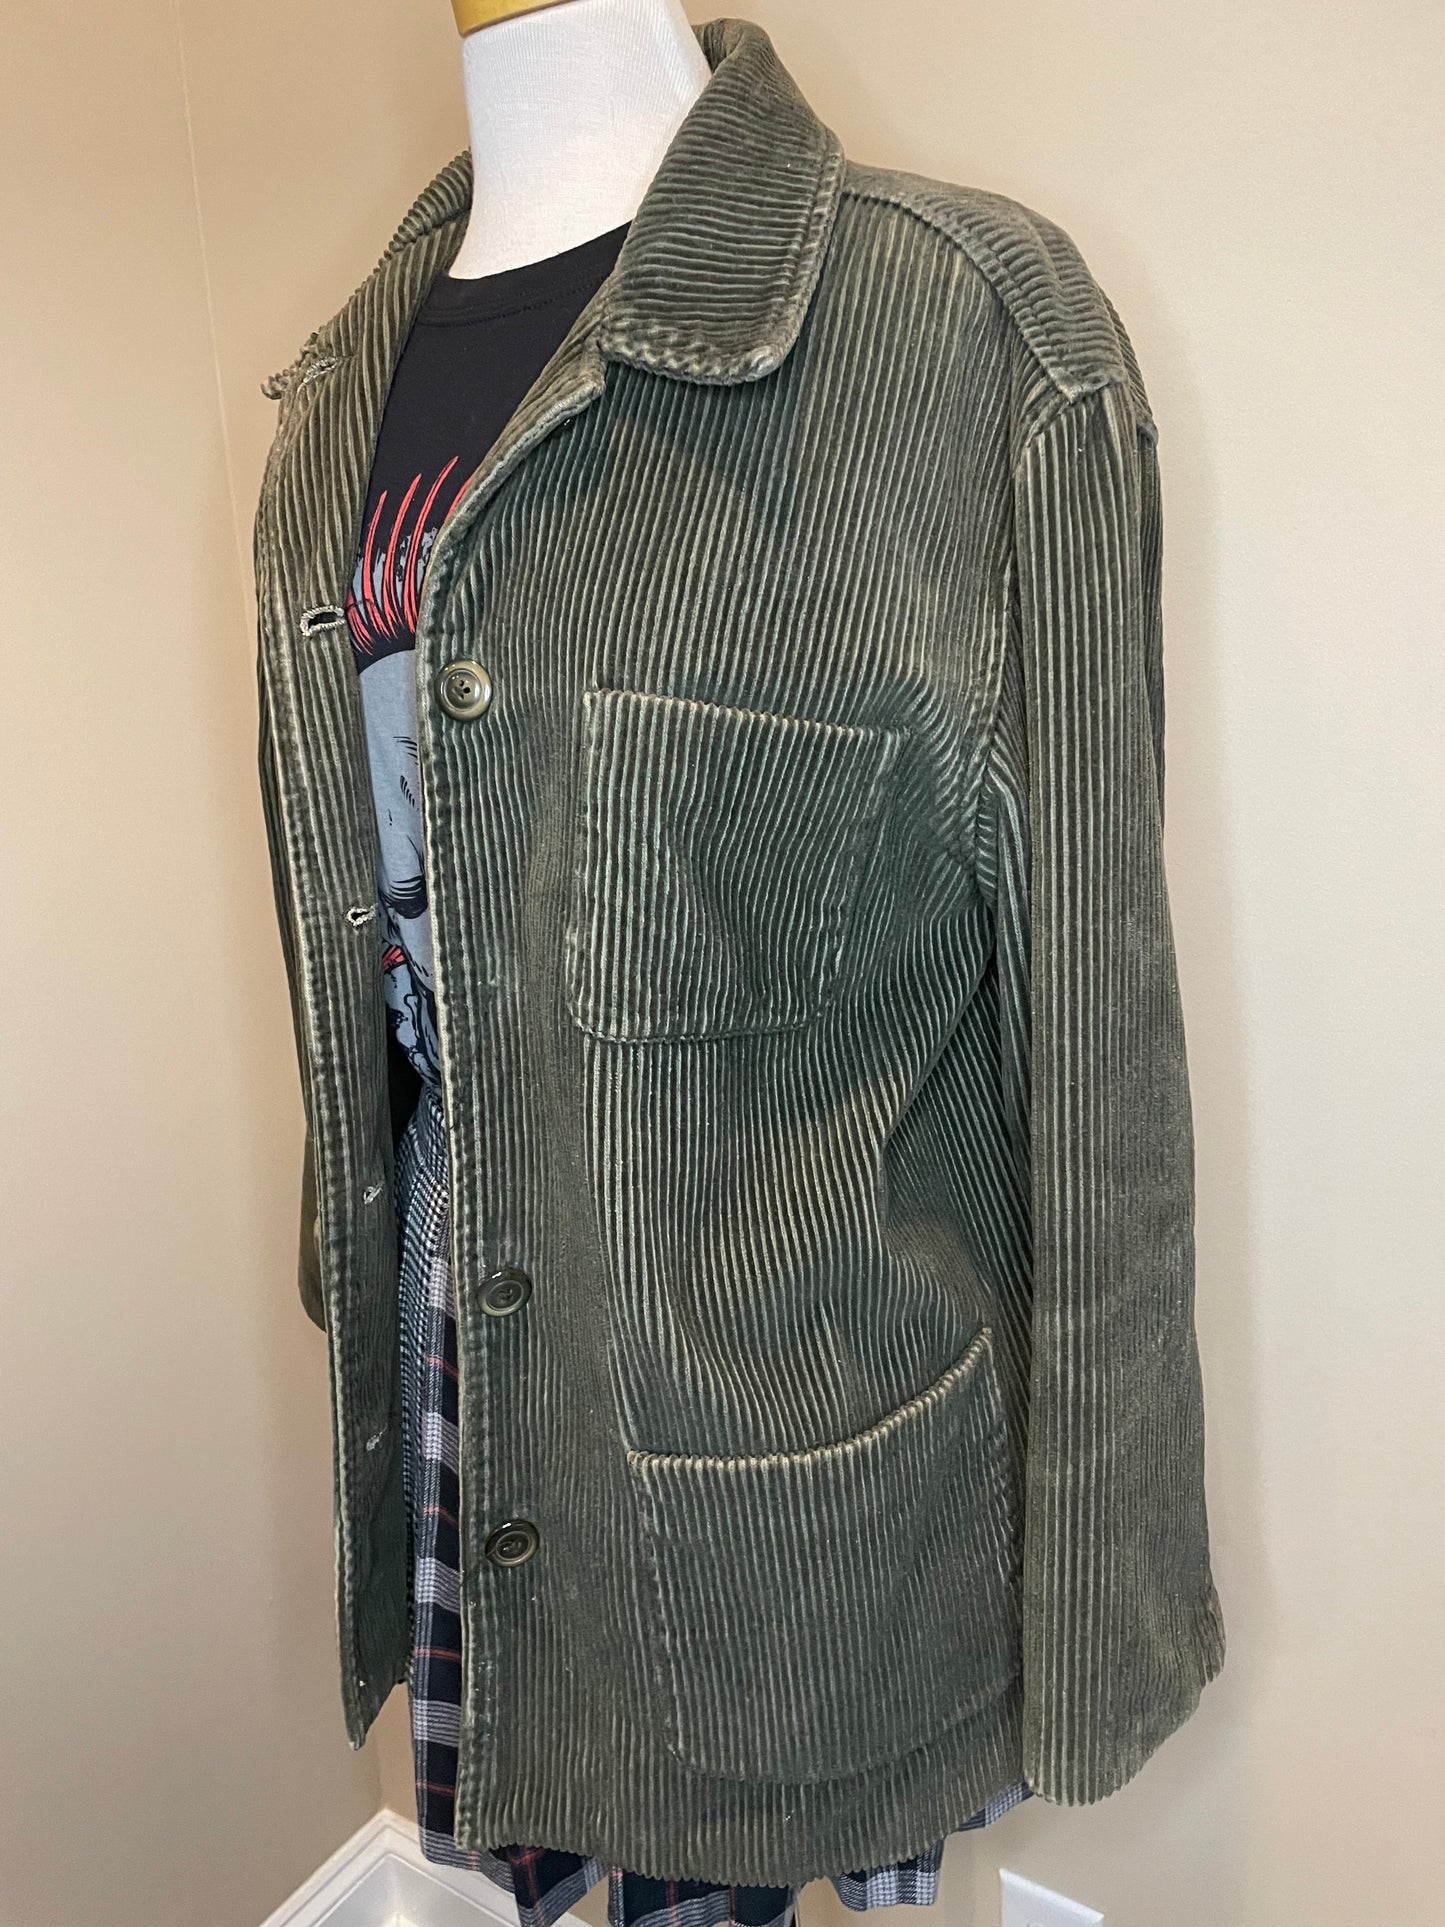 Vintage 1994 Gap Corduroy Jacket